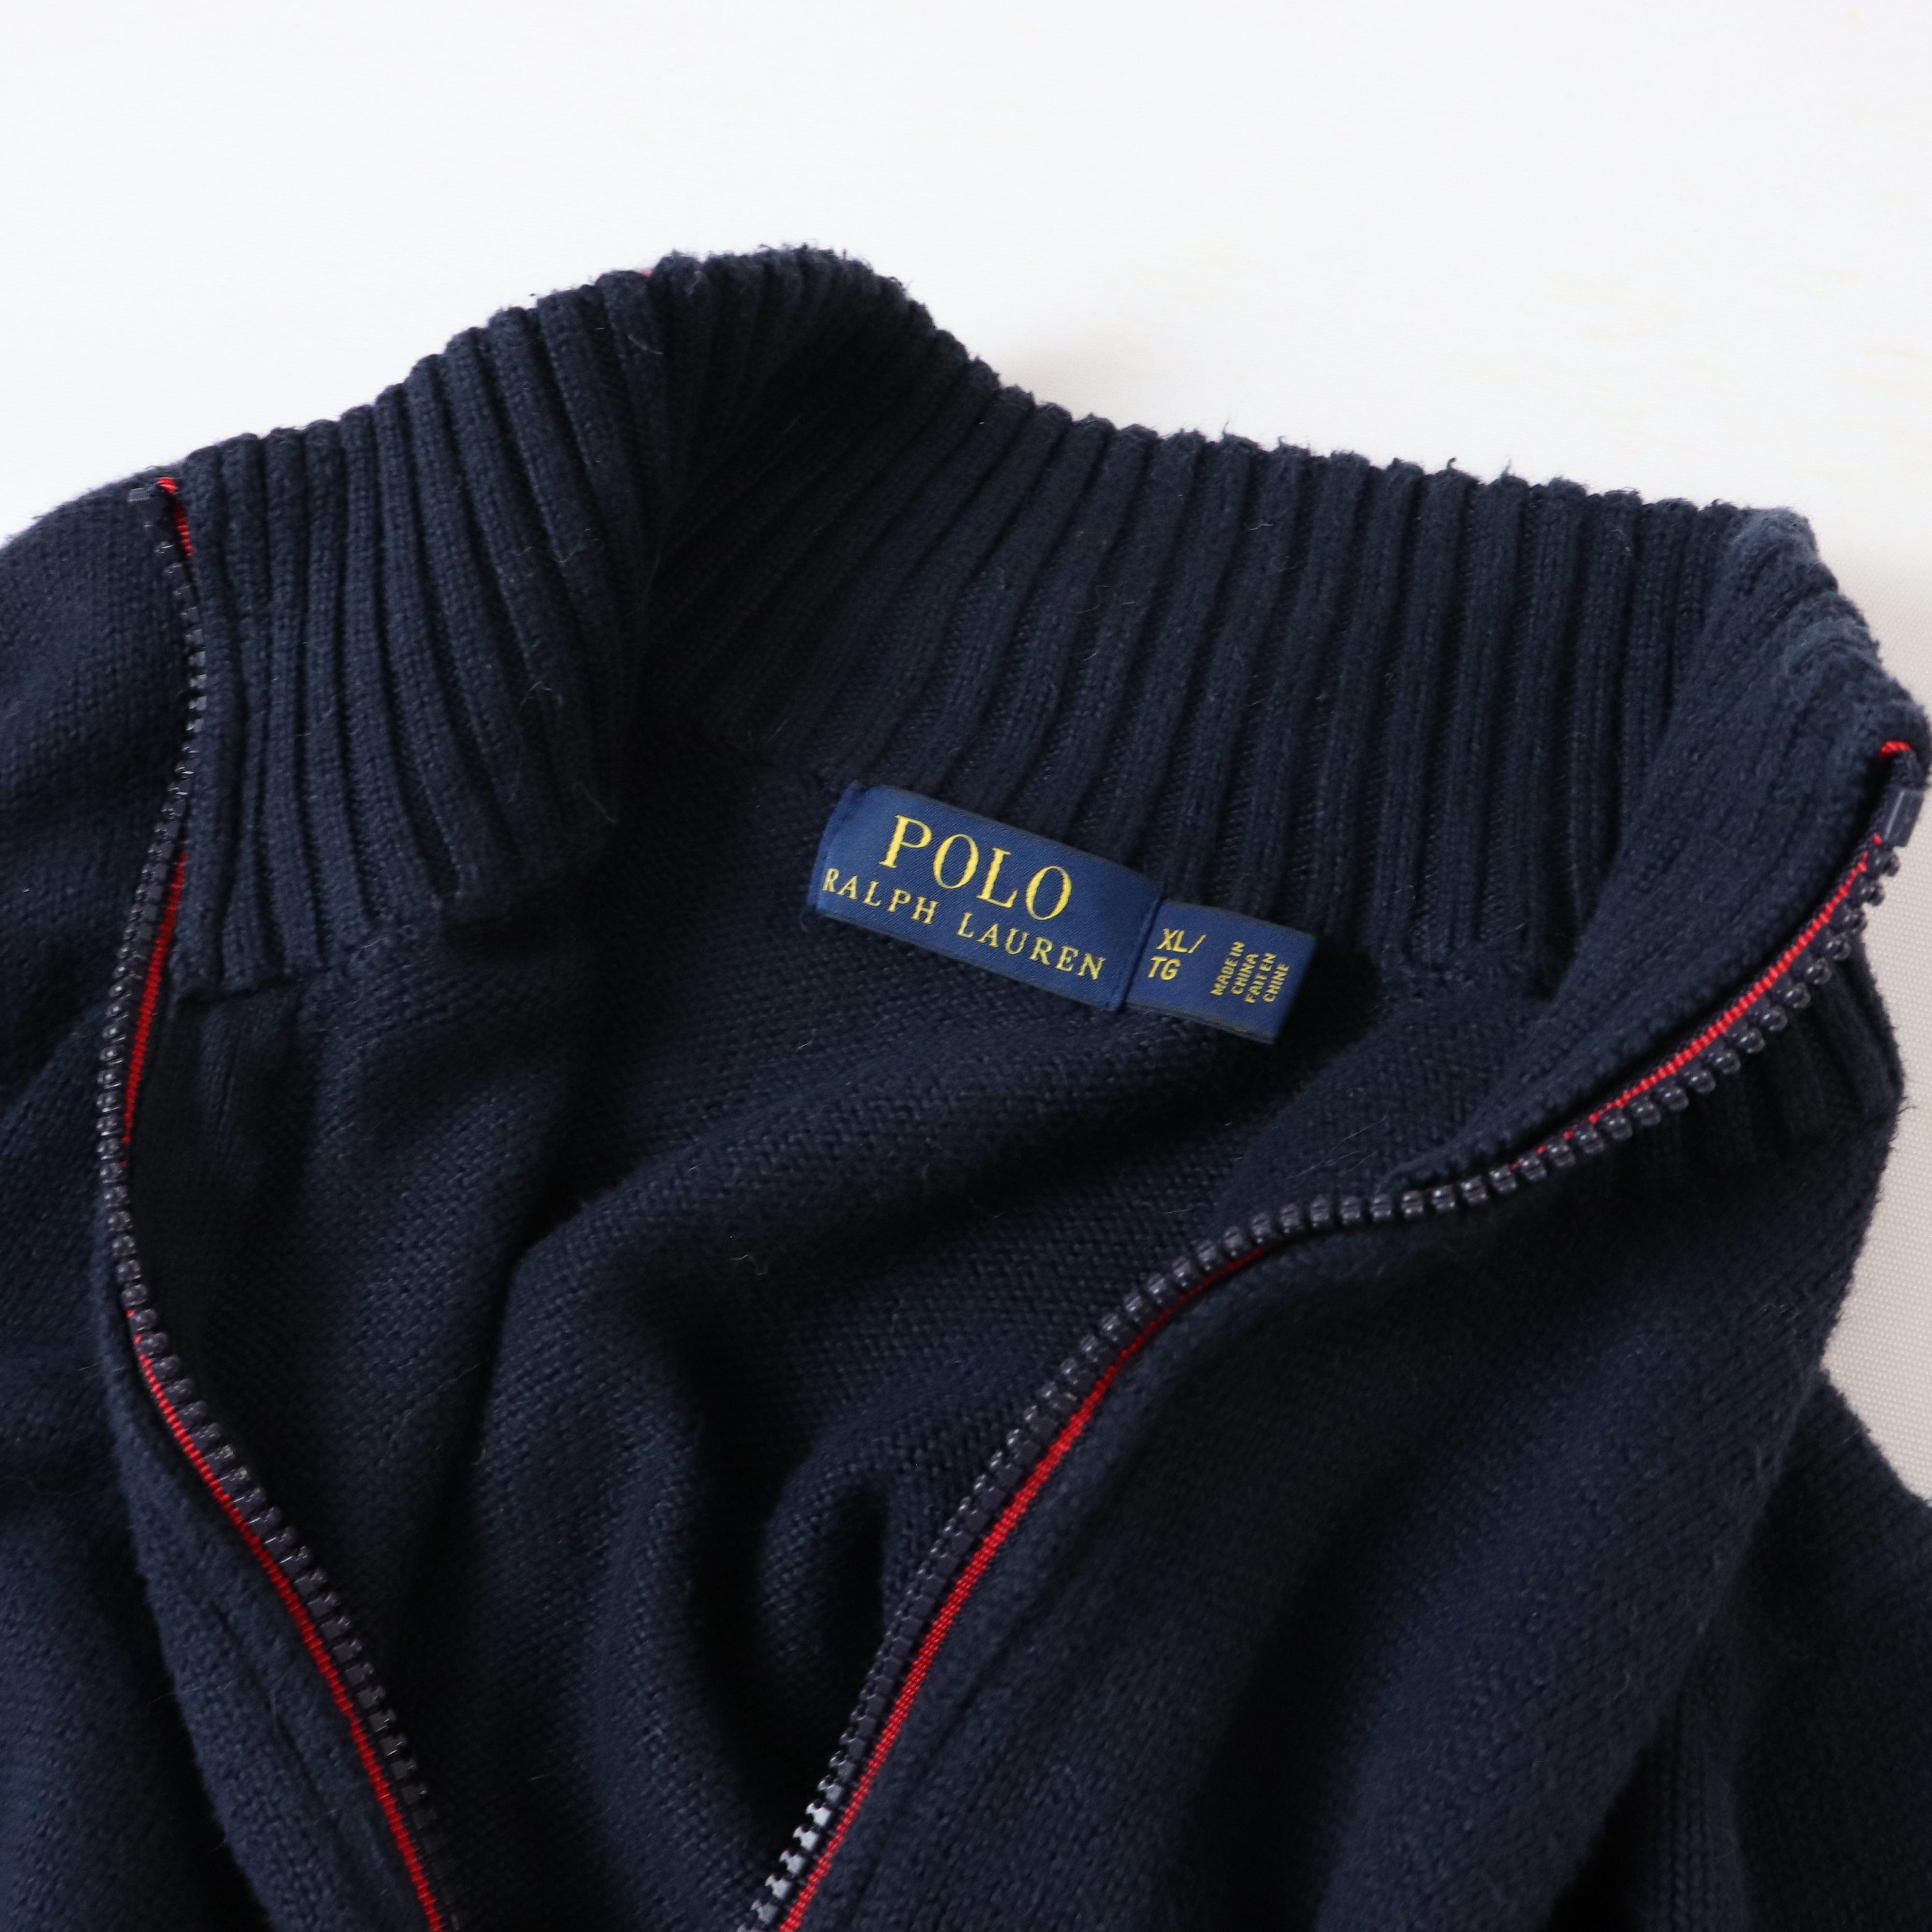 Vintage Polo Ralph Lauren Knit Zip Up Sweater Size XL